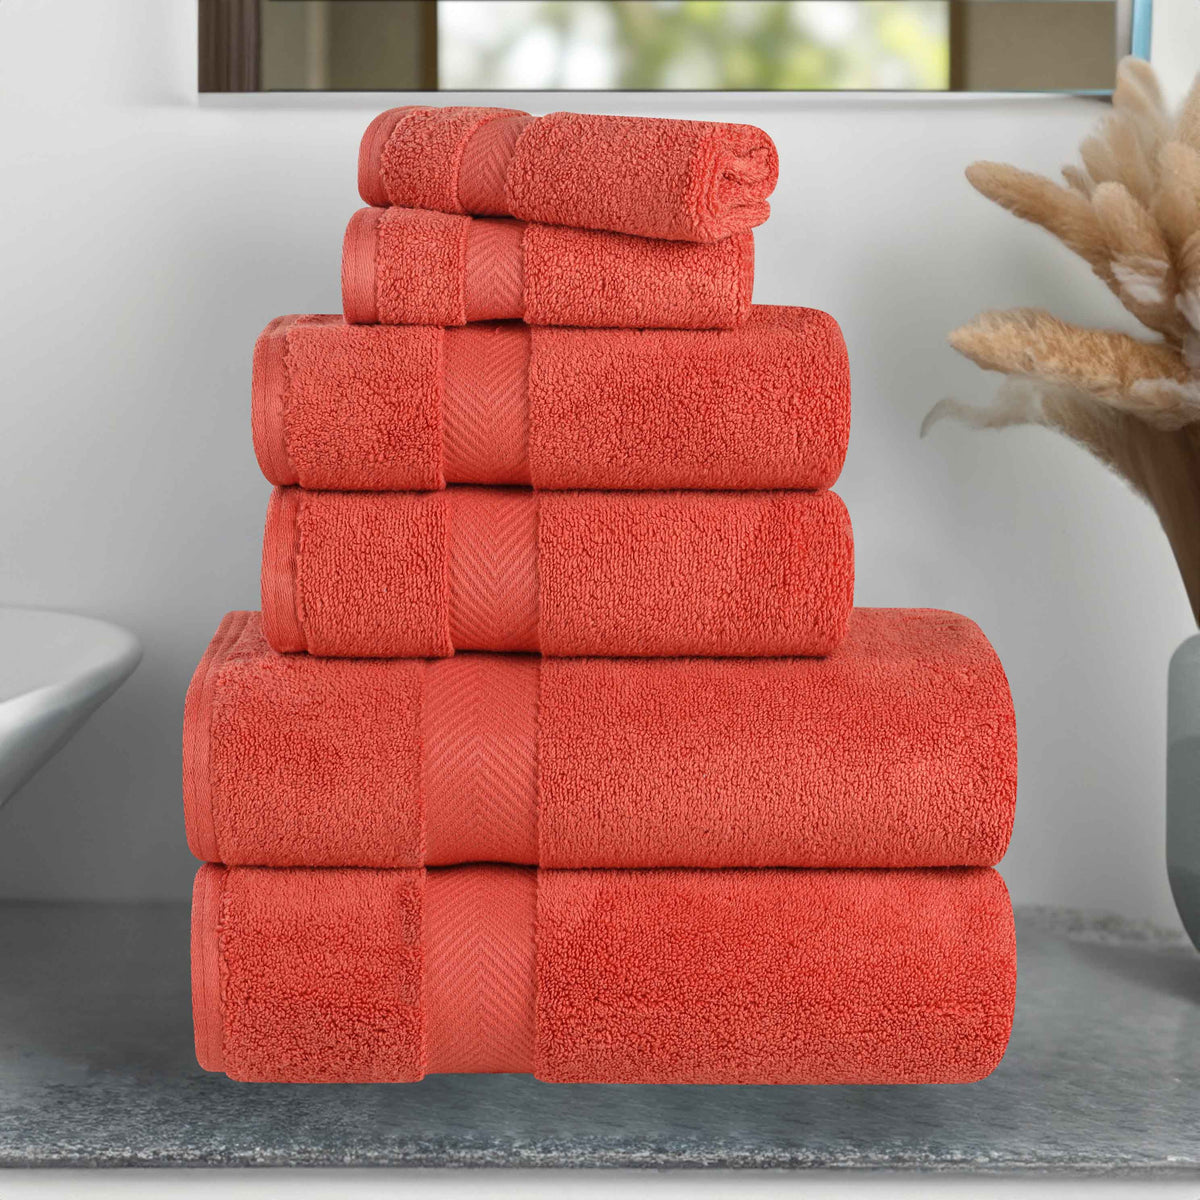 Zero-Twist Cotton Quick-Drying Absorbent Assorted 6 Piece Towel Set - Brick